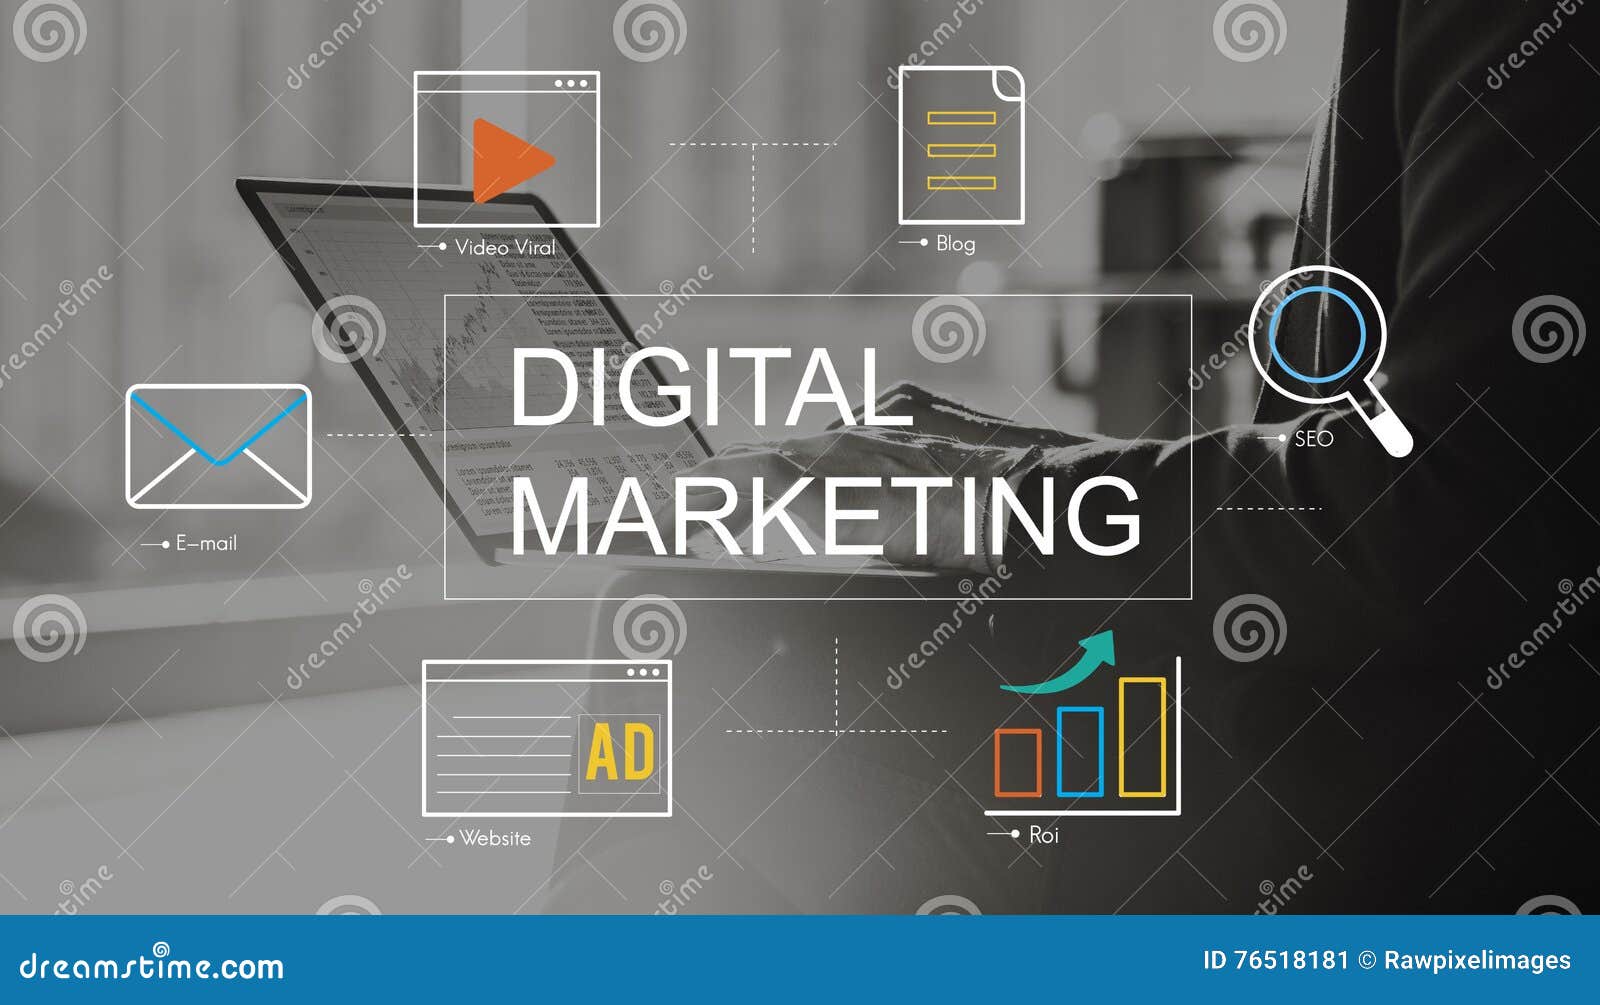 digital marketing media technology graphic concept